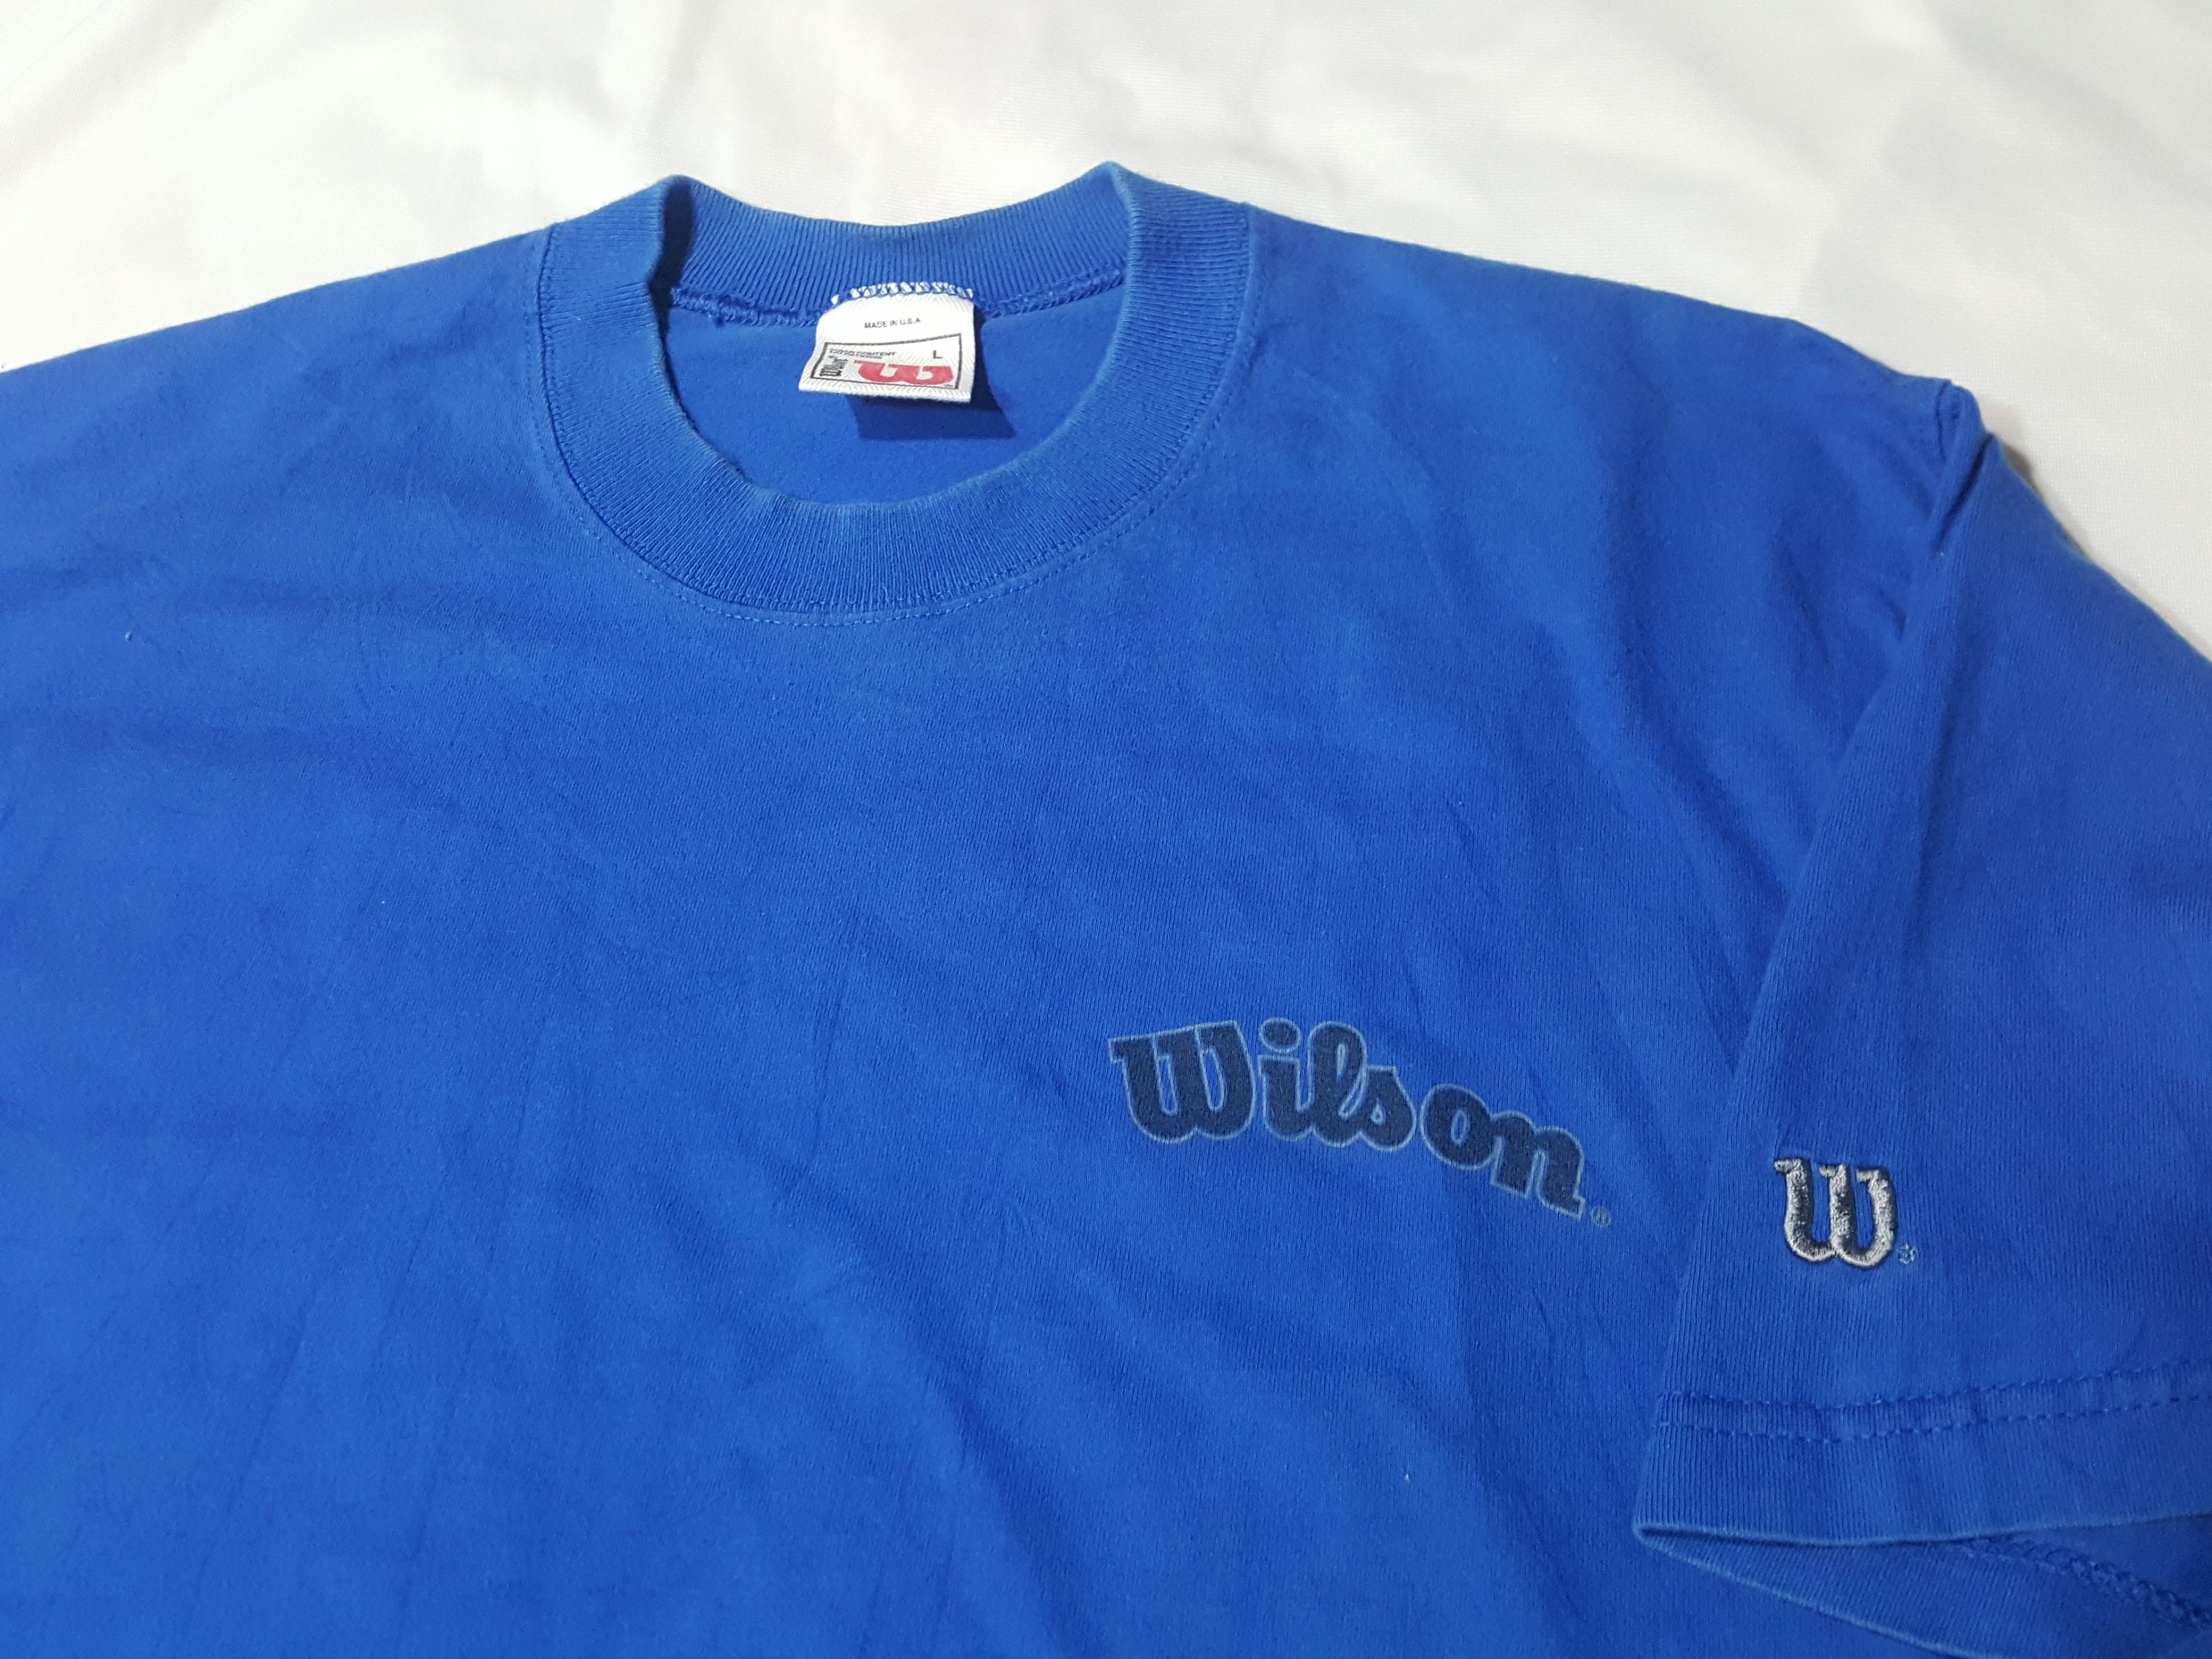 Vintage Wilson shirt 90s | Etsy